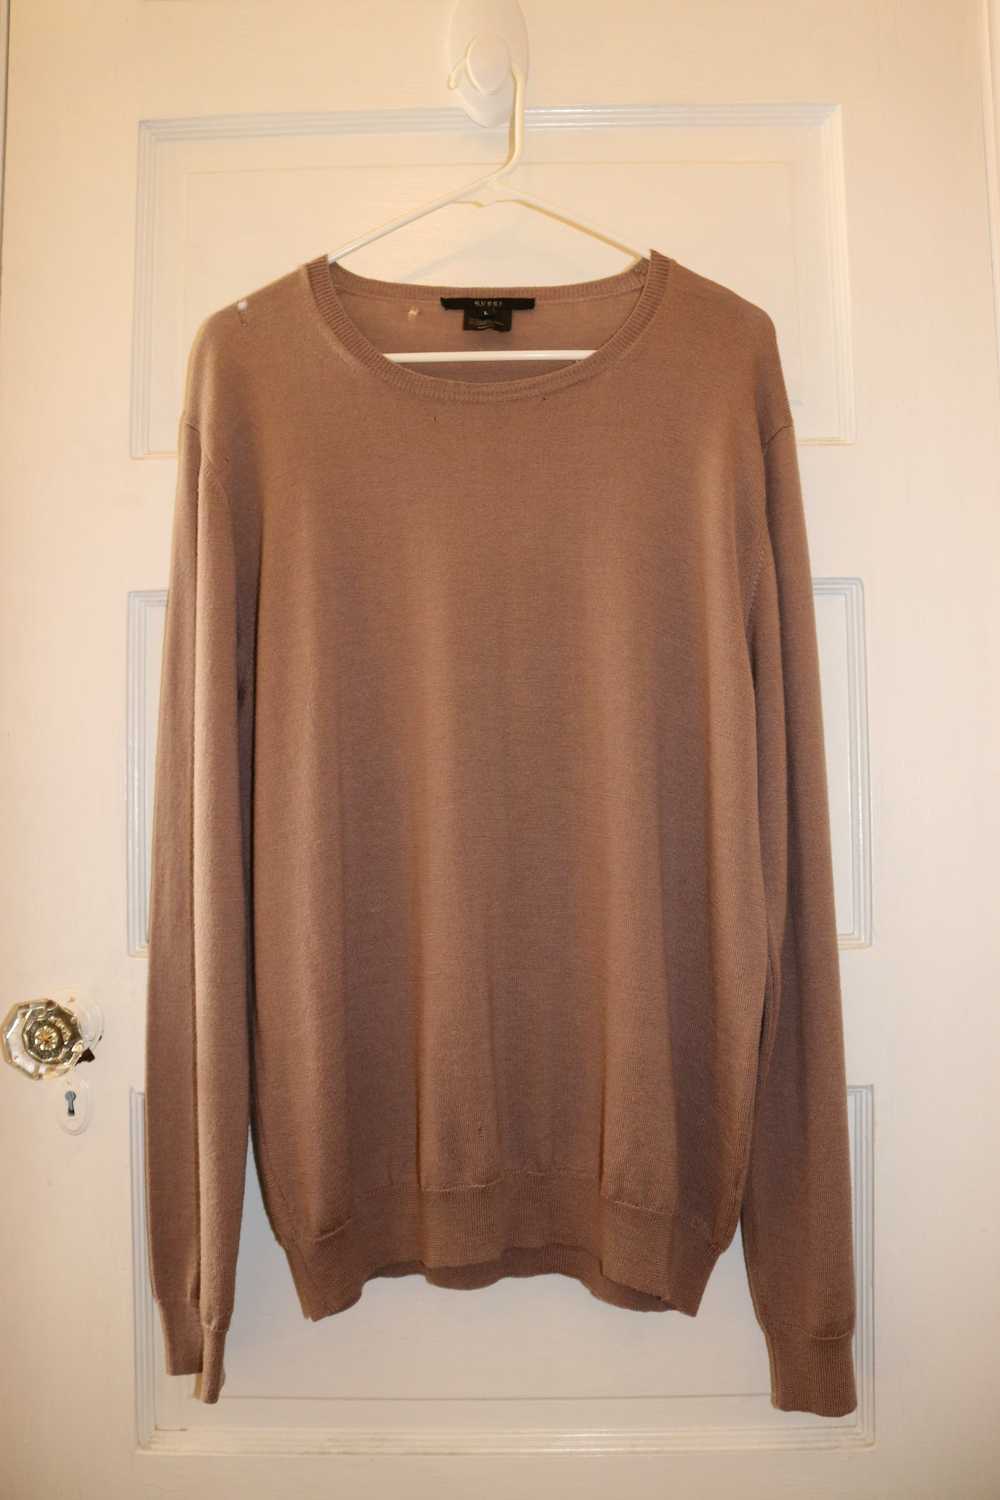 Gucci Gucci Wool/Silk/Cashmere Sweater - image 1